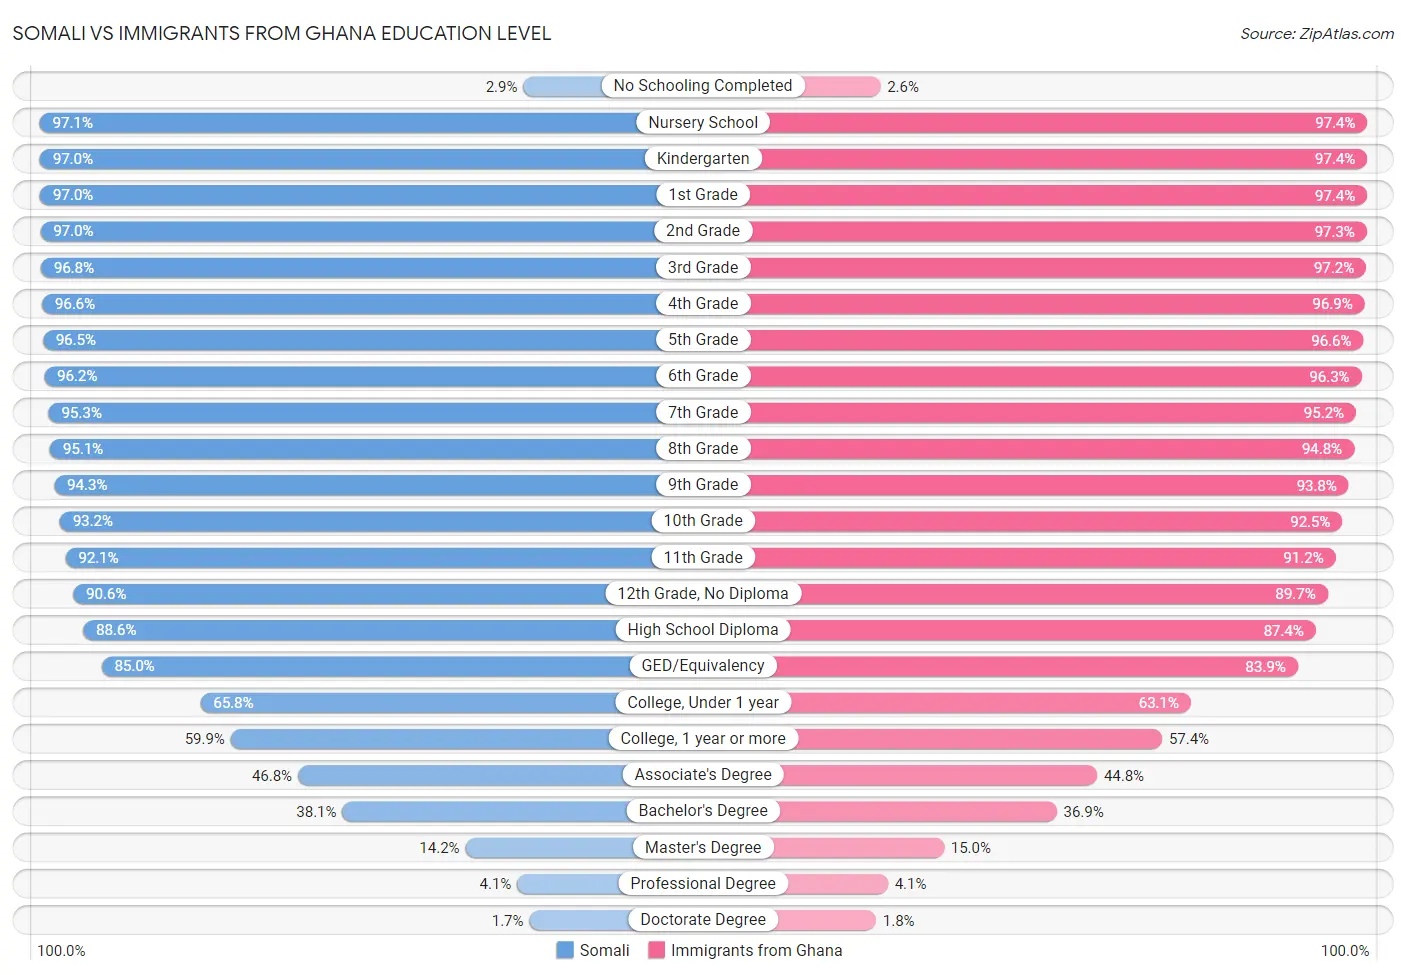 Somali vs Immigrants from Ghana Education Level